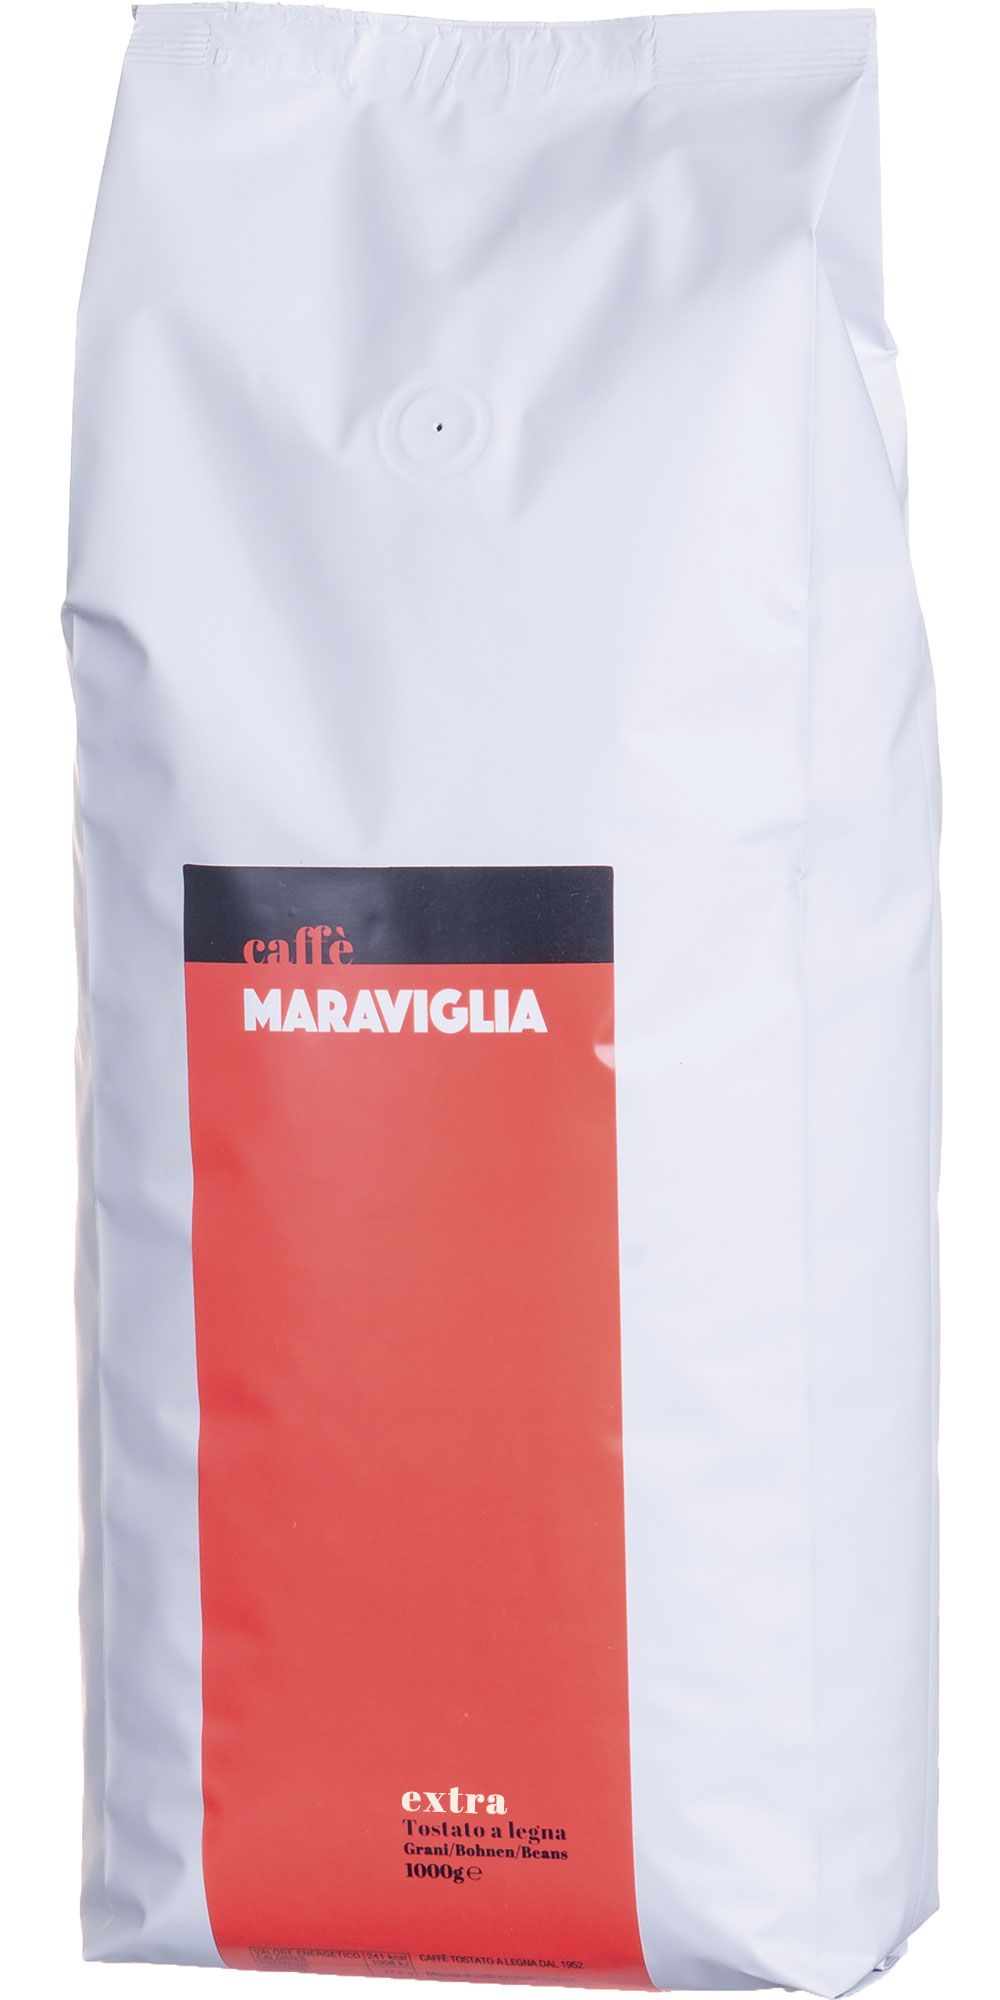 MARAVIGLIA coffee – extra